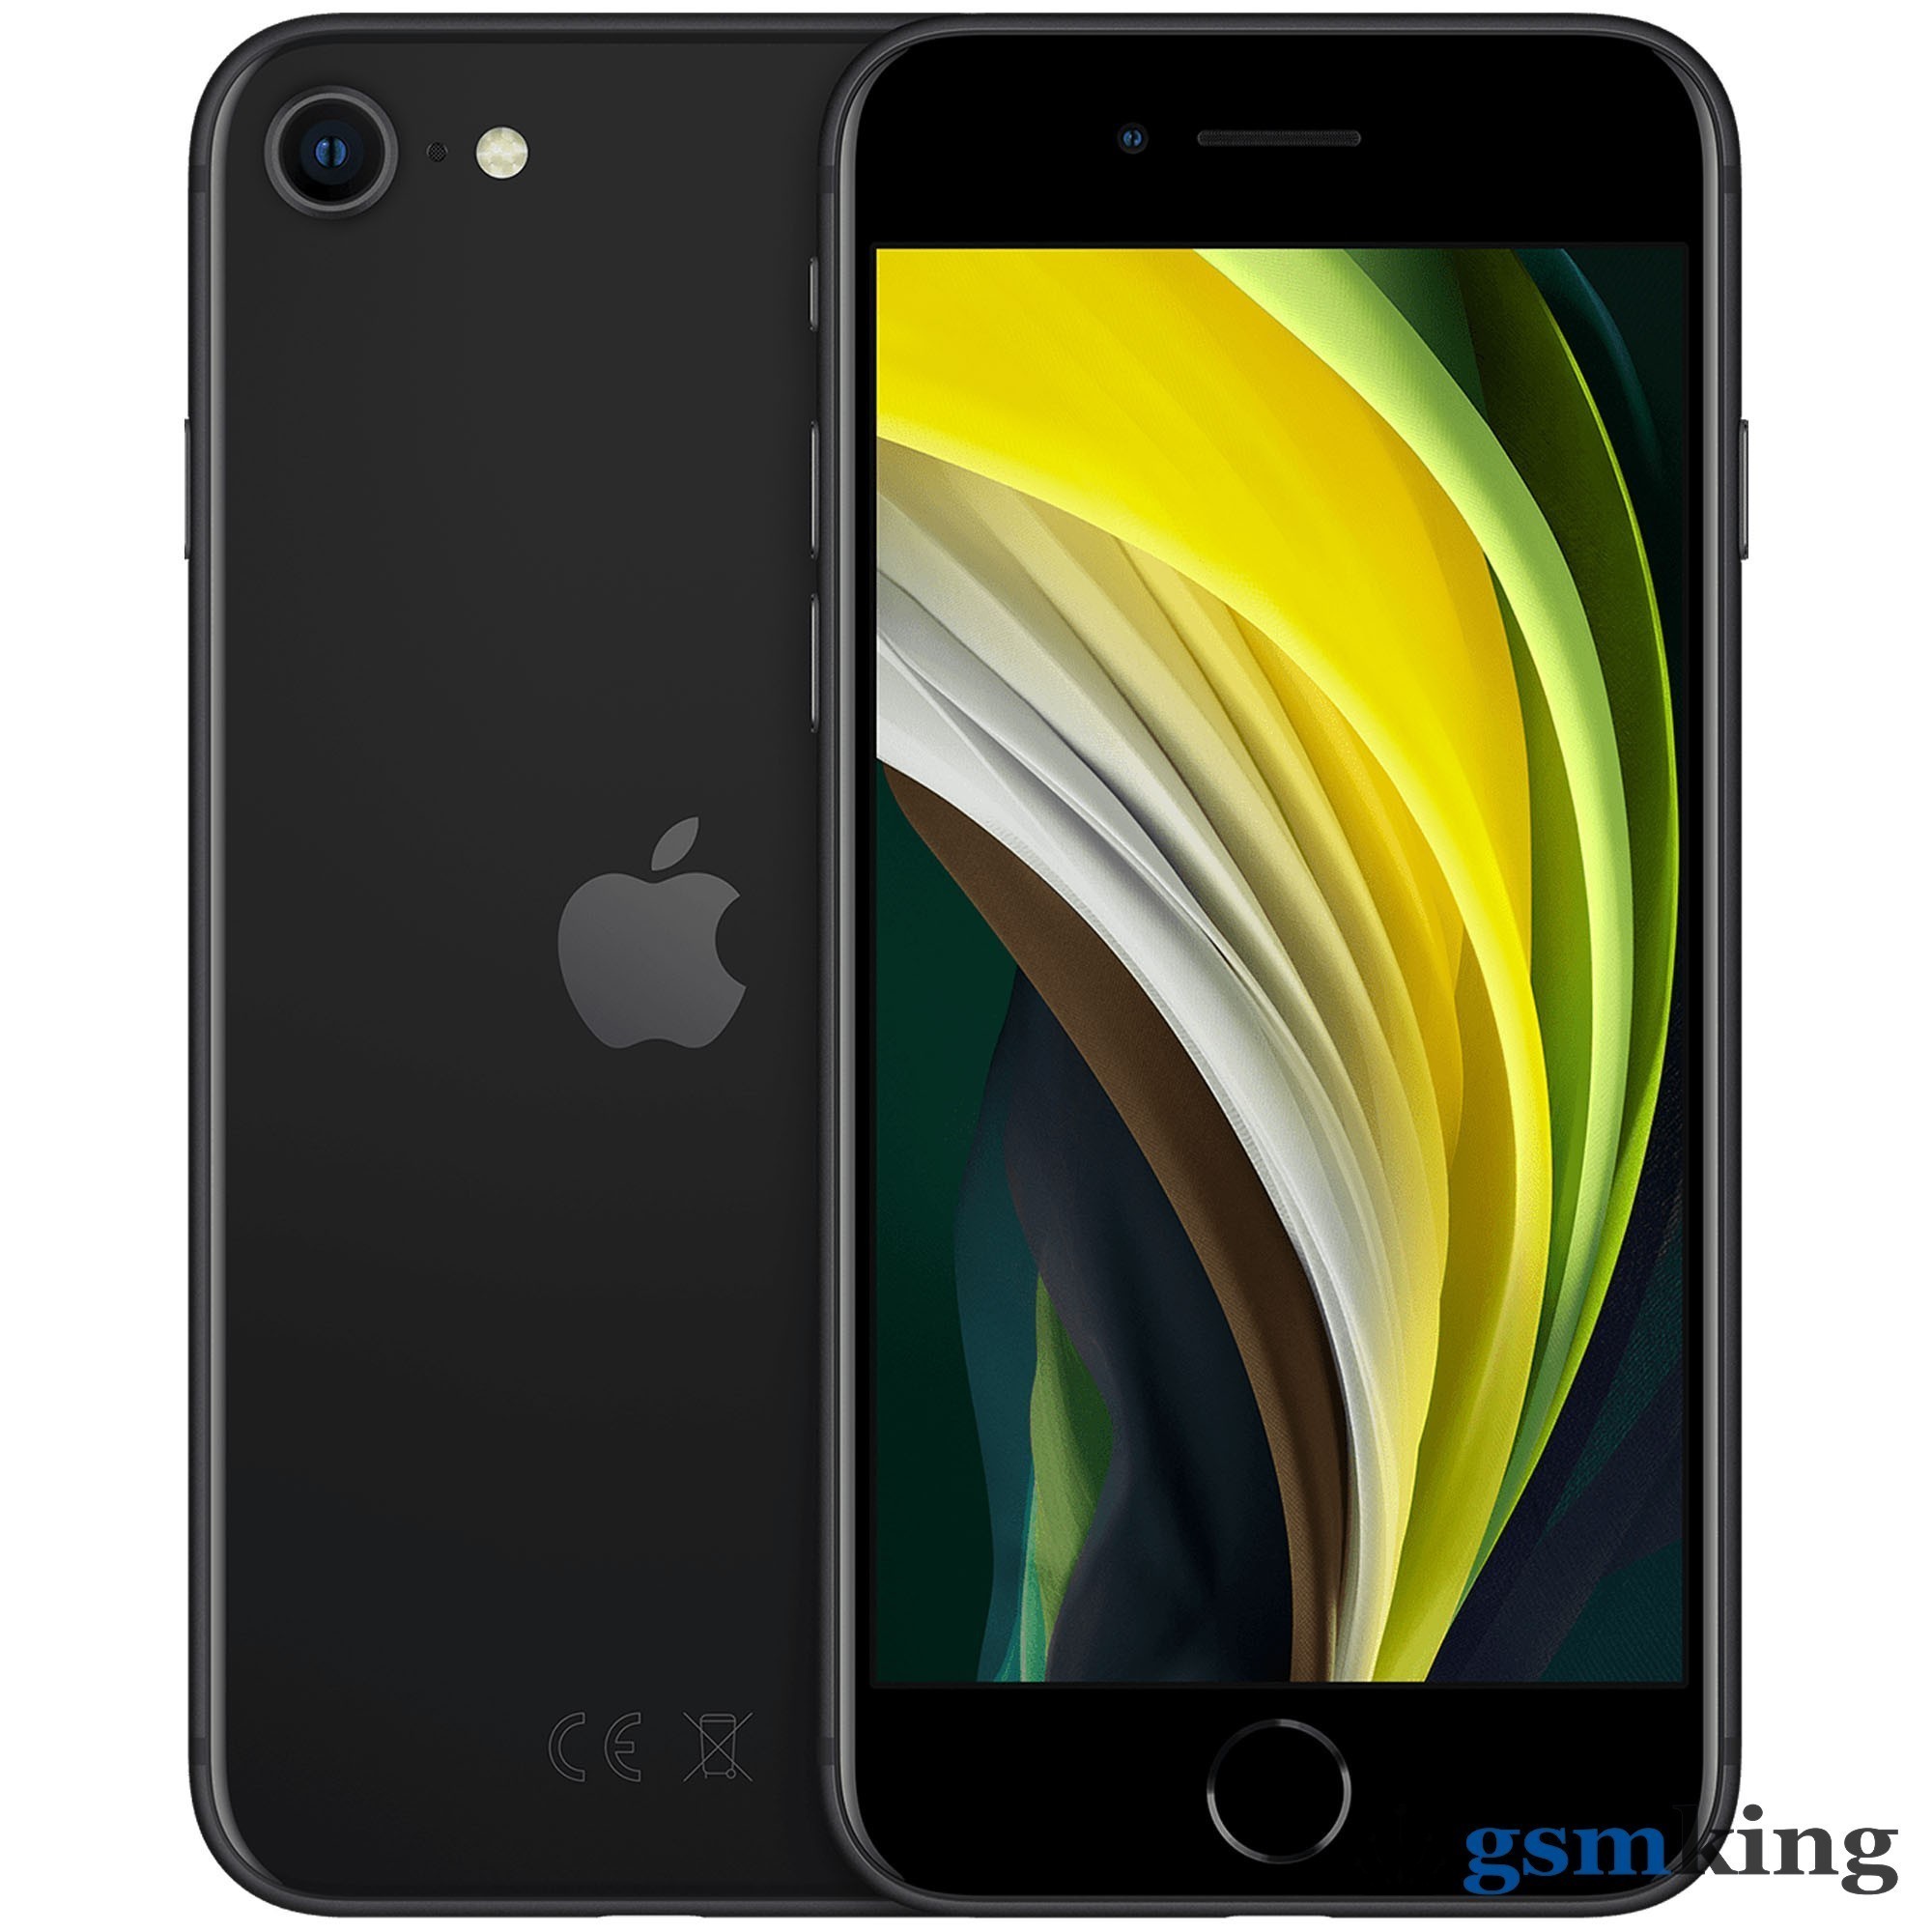 Смартфон Apple iPhone SE 2020 64GB Black (Чёрный) MX9N2LL/A - Купить на  Горбушке, цена 33400.0 ₽.